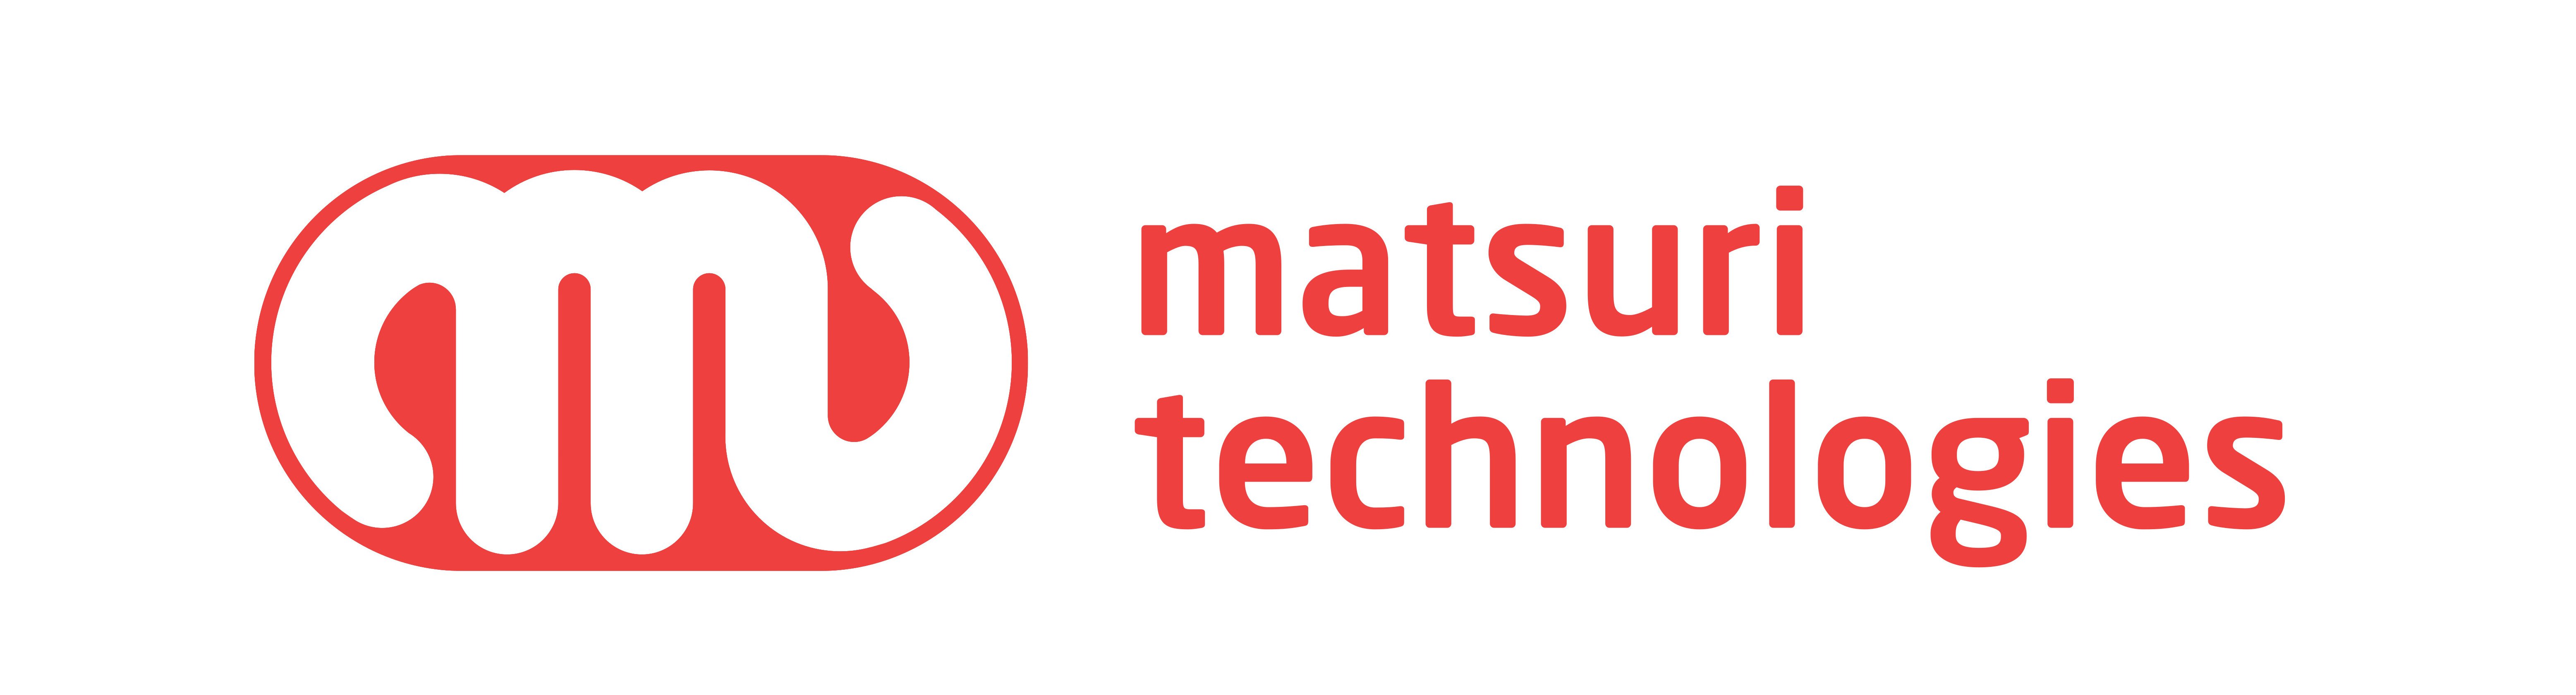 matsuri technologies ロゴ